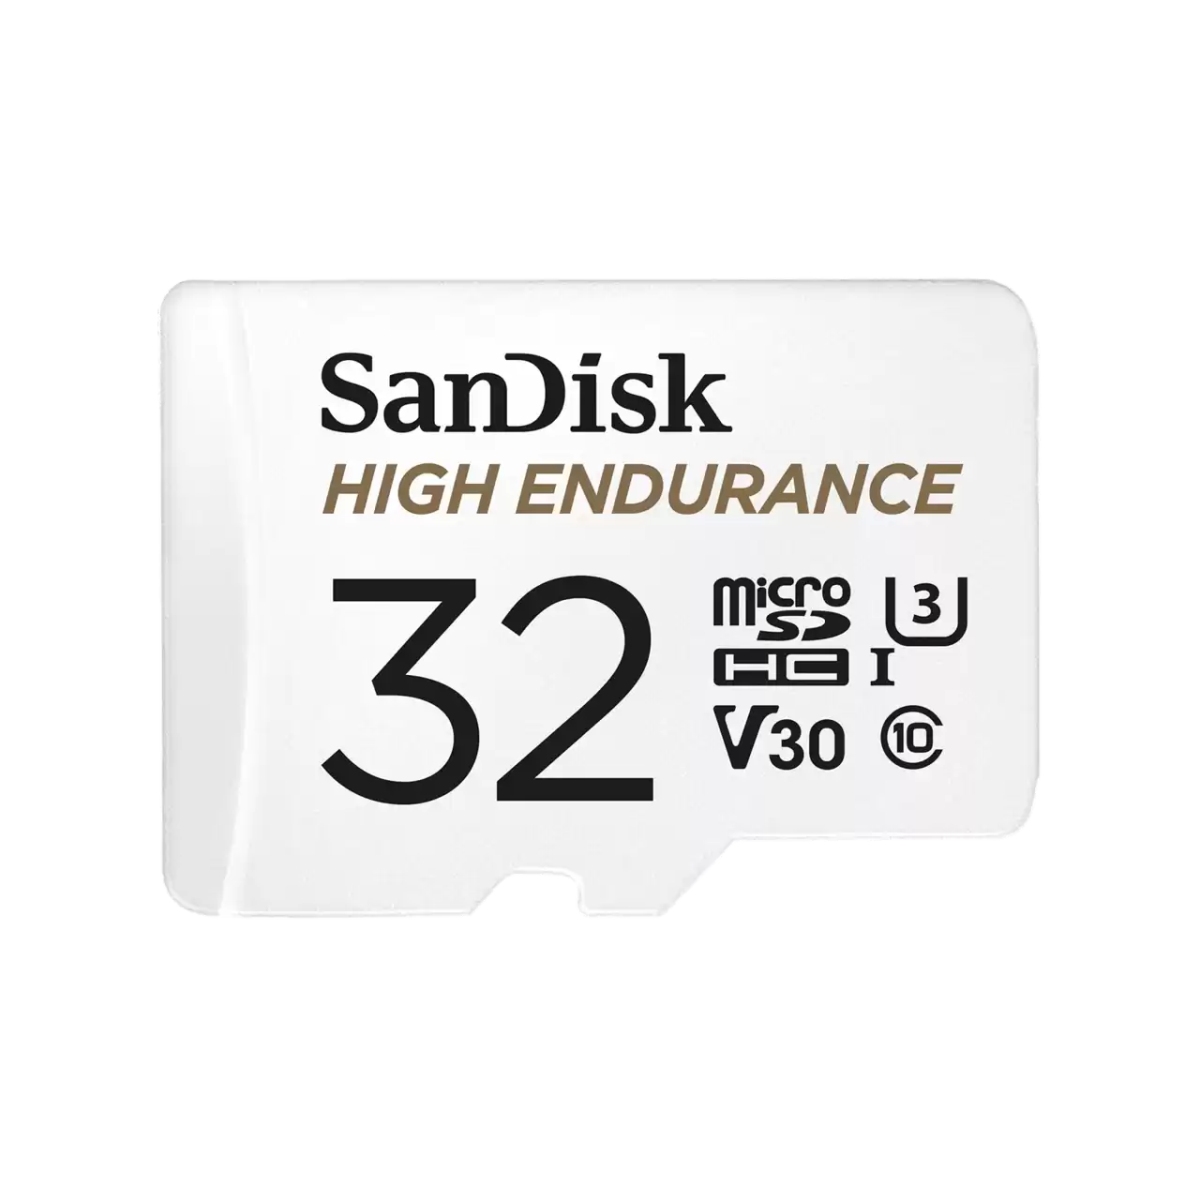 Obrázek SanDisk High Endurance/micro SDHC/32GB/100MBps/UHS-I U3 / Class 10/+ Adaptér